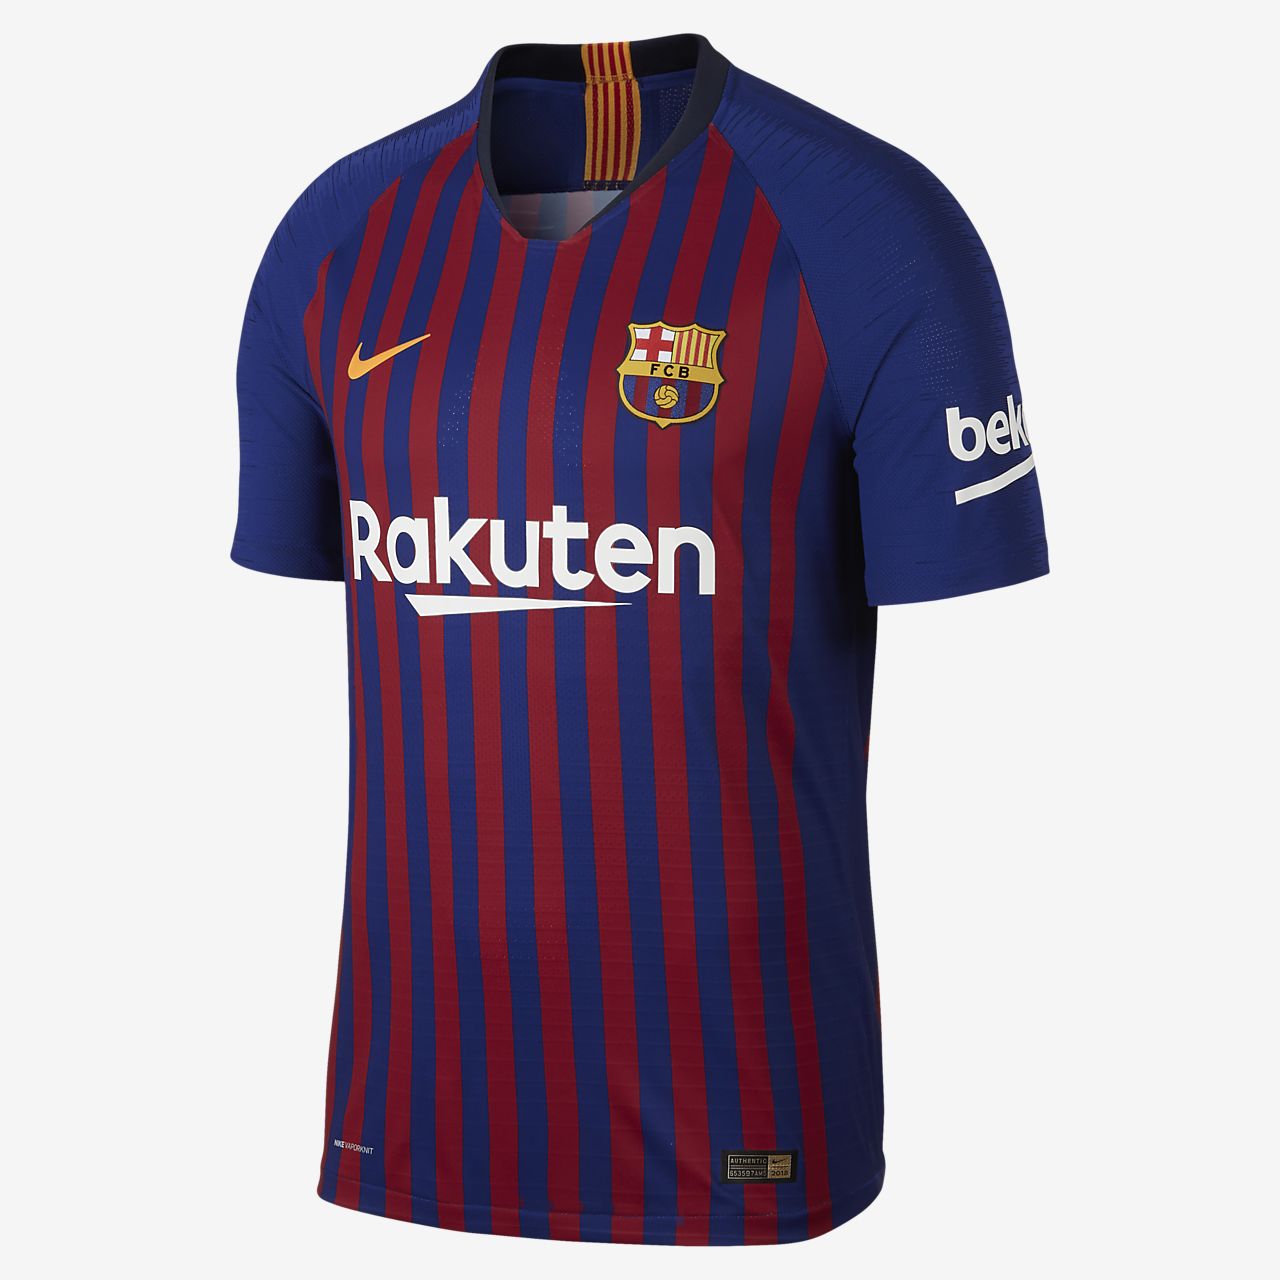 Kptallat a kvetkezre: „barcelona home jersey 18 19”